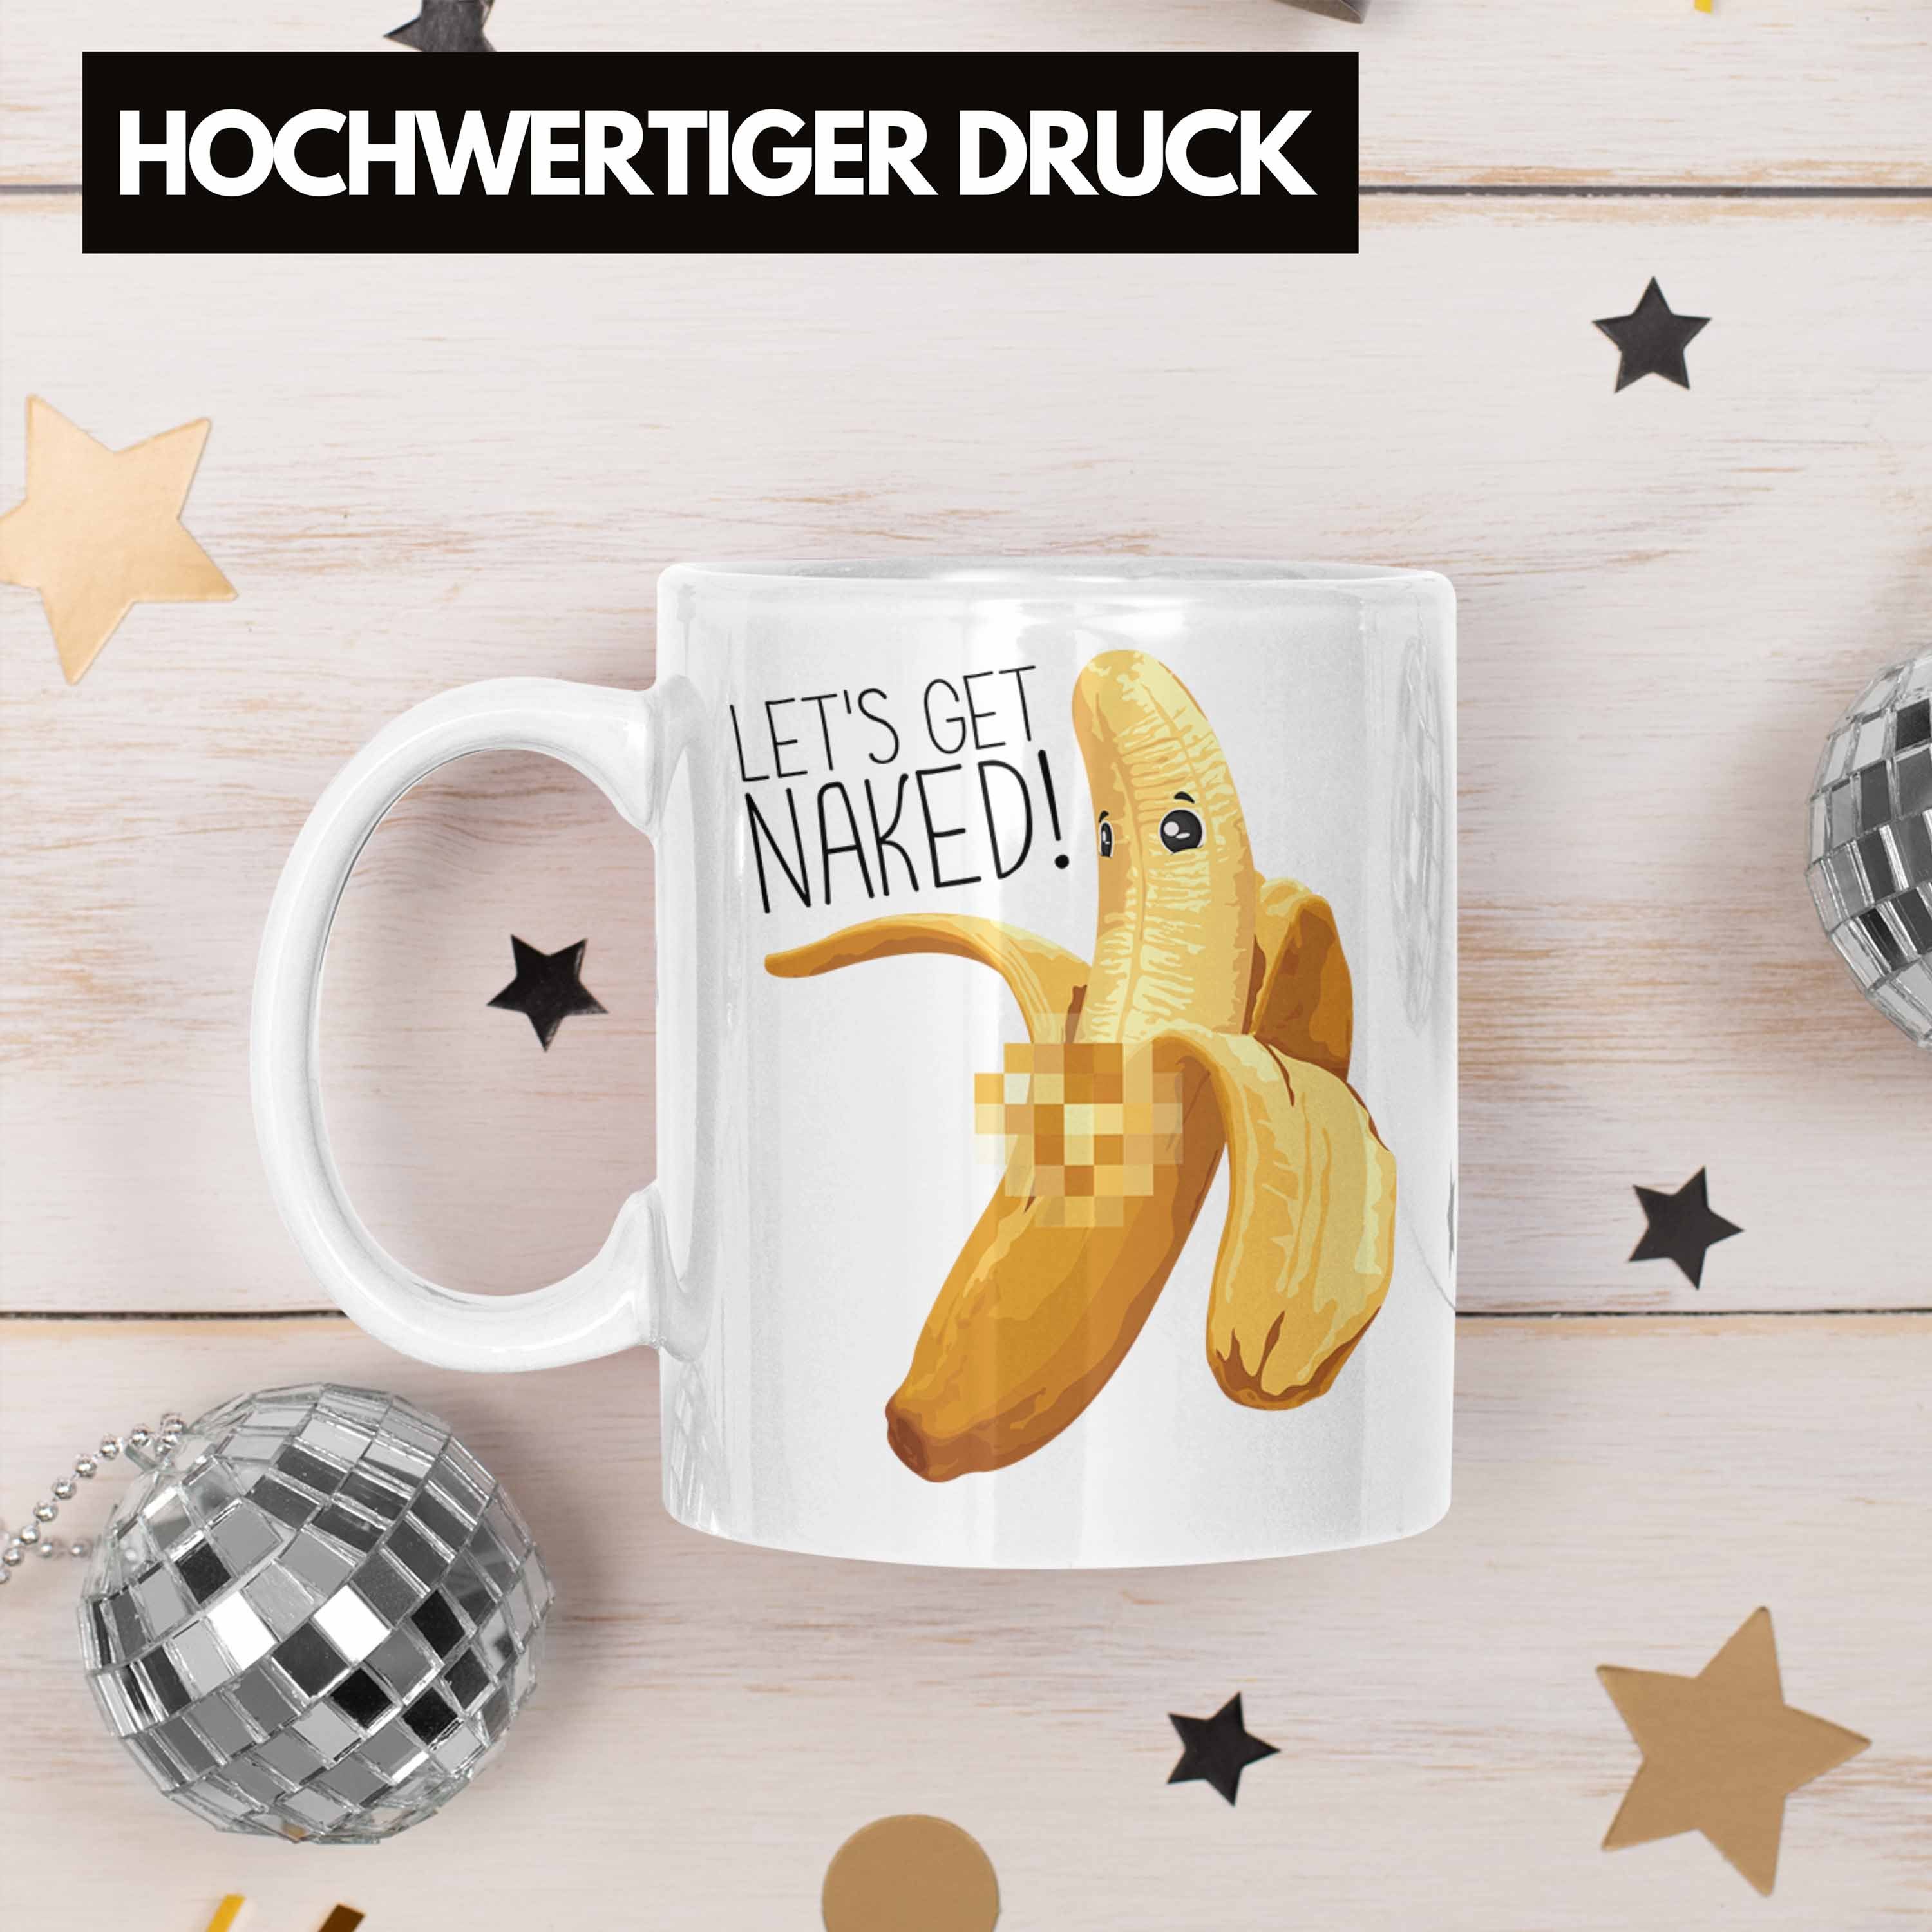 Trendation Tasse Banane Striptease Naked Lets Bech Tasse Weiss Erwachsener Get Humor Geschenk